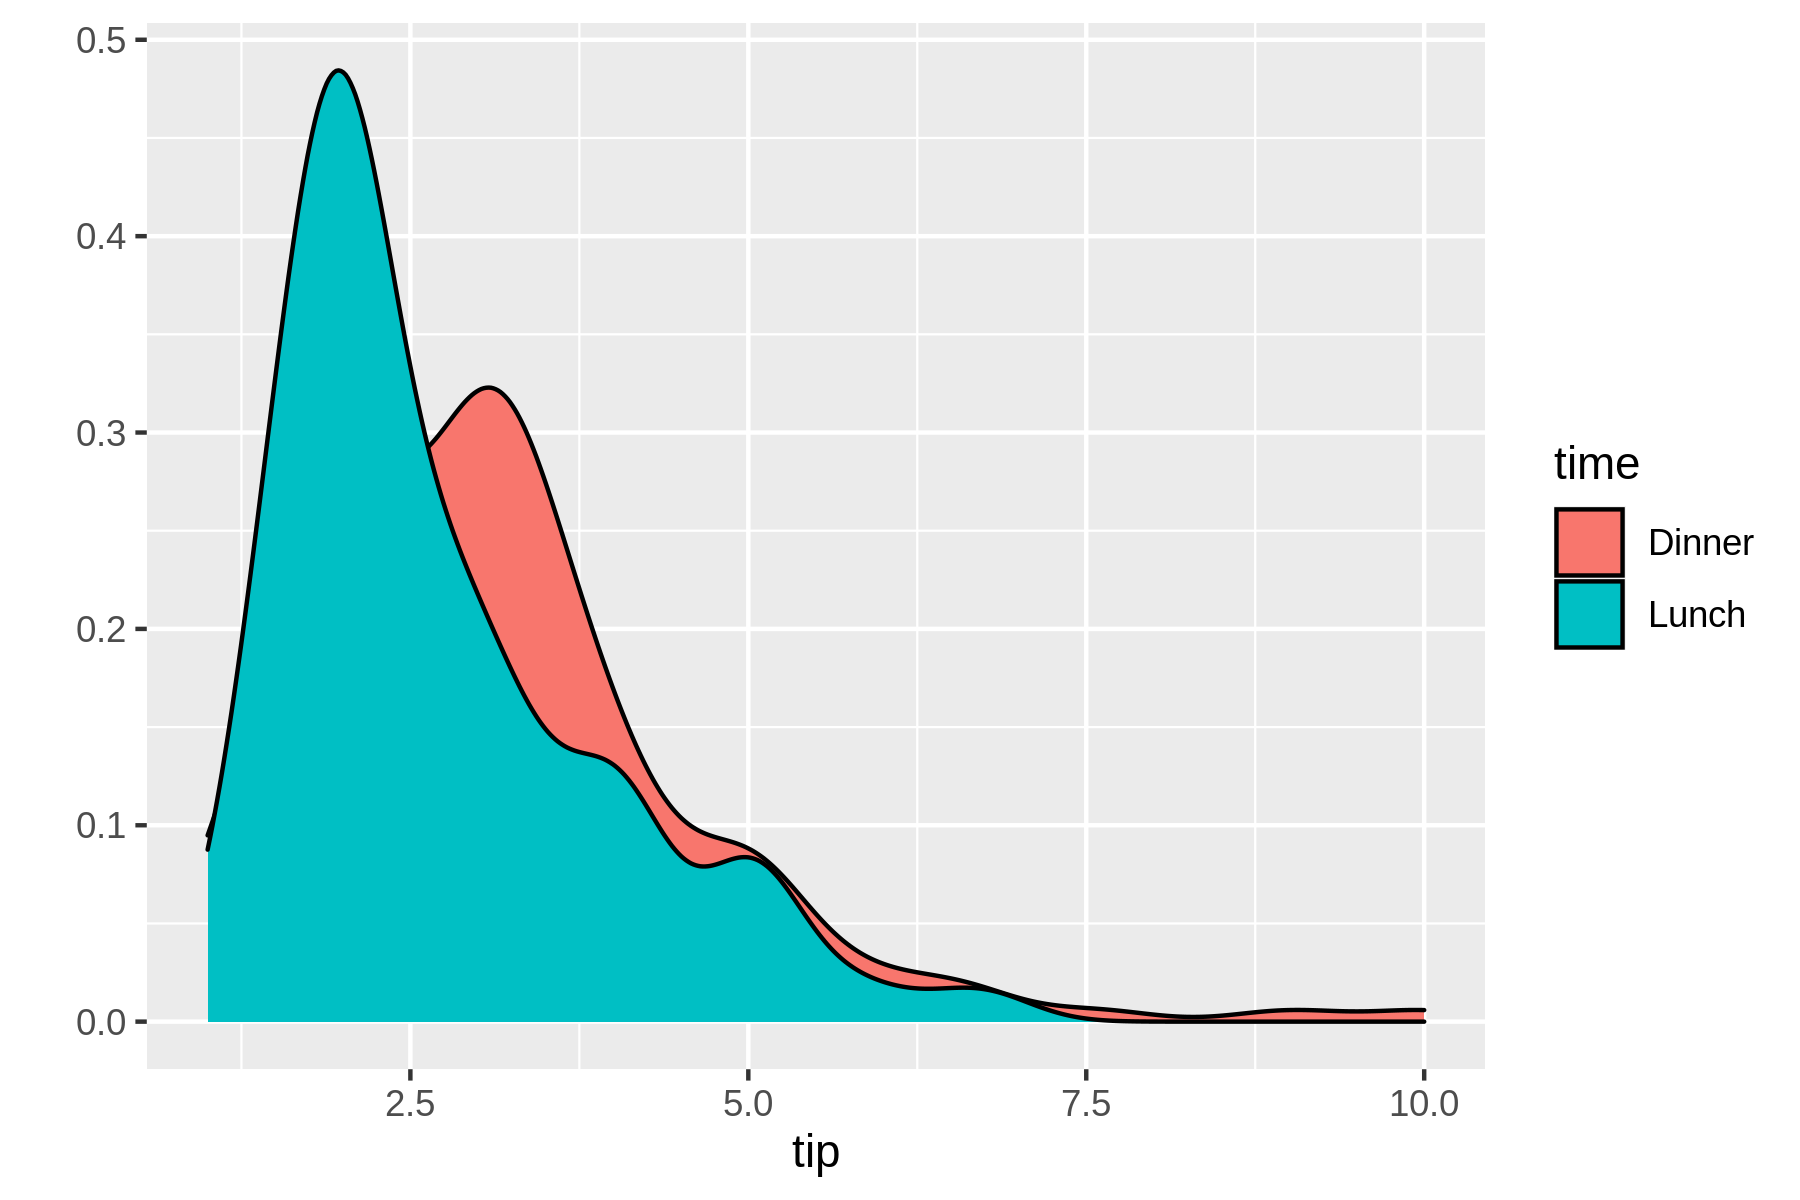 A density plot